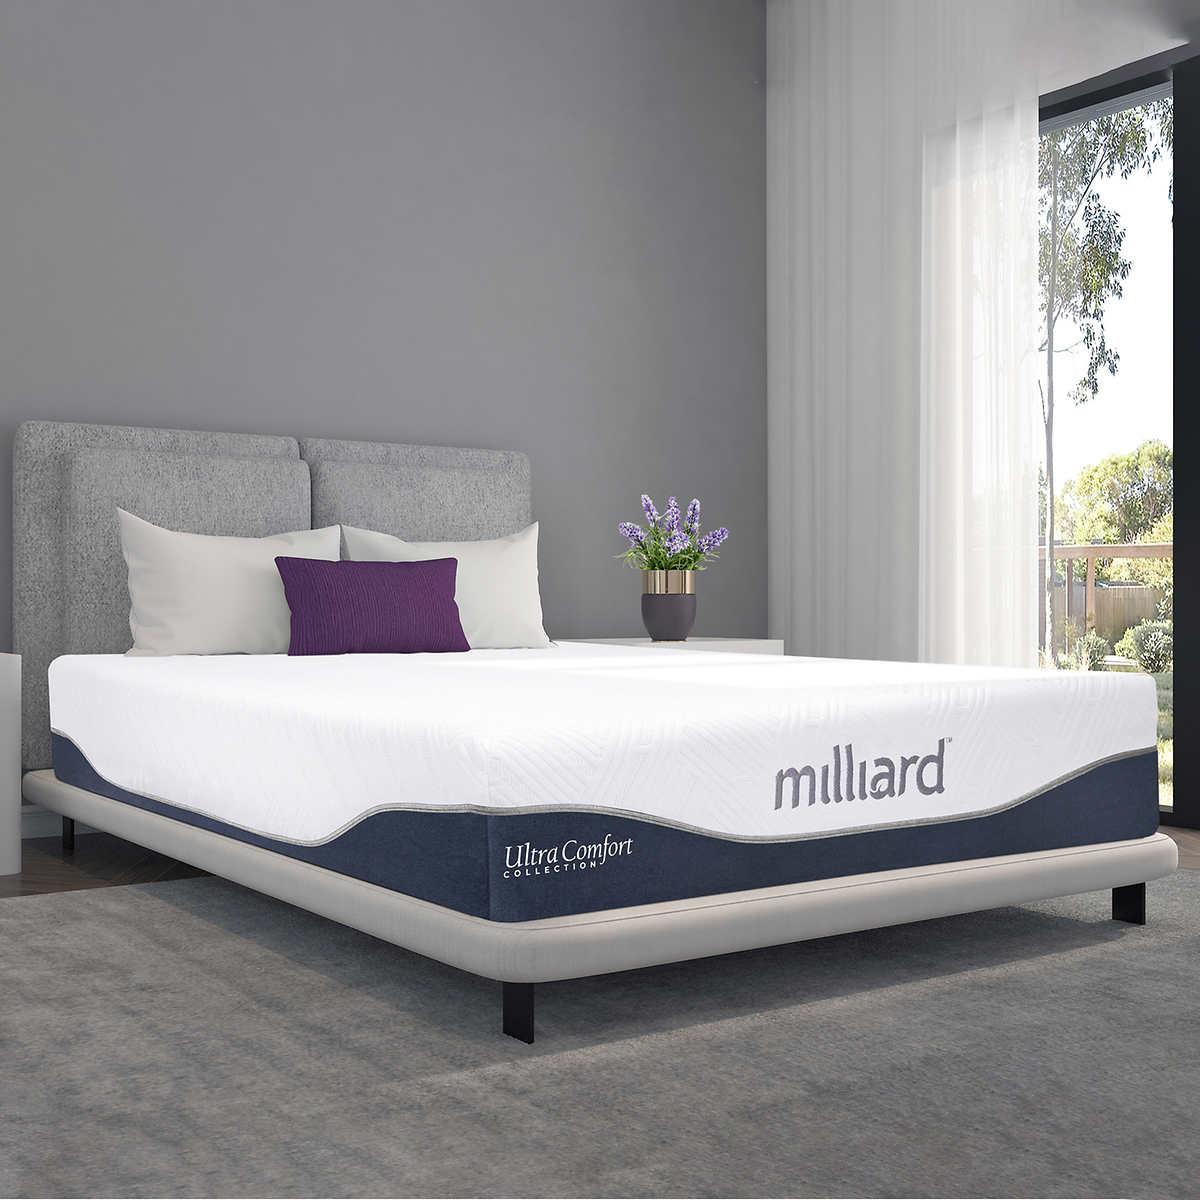 Milliard Premium Ultra-Comfort 25.4 cm (10 in.) Memory Foam